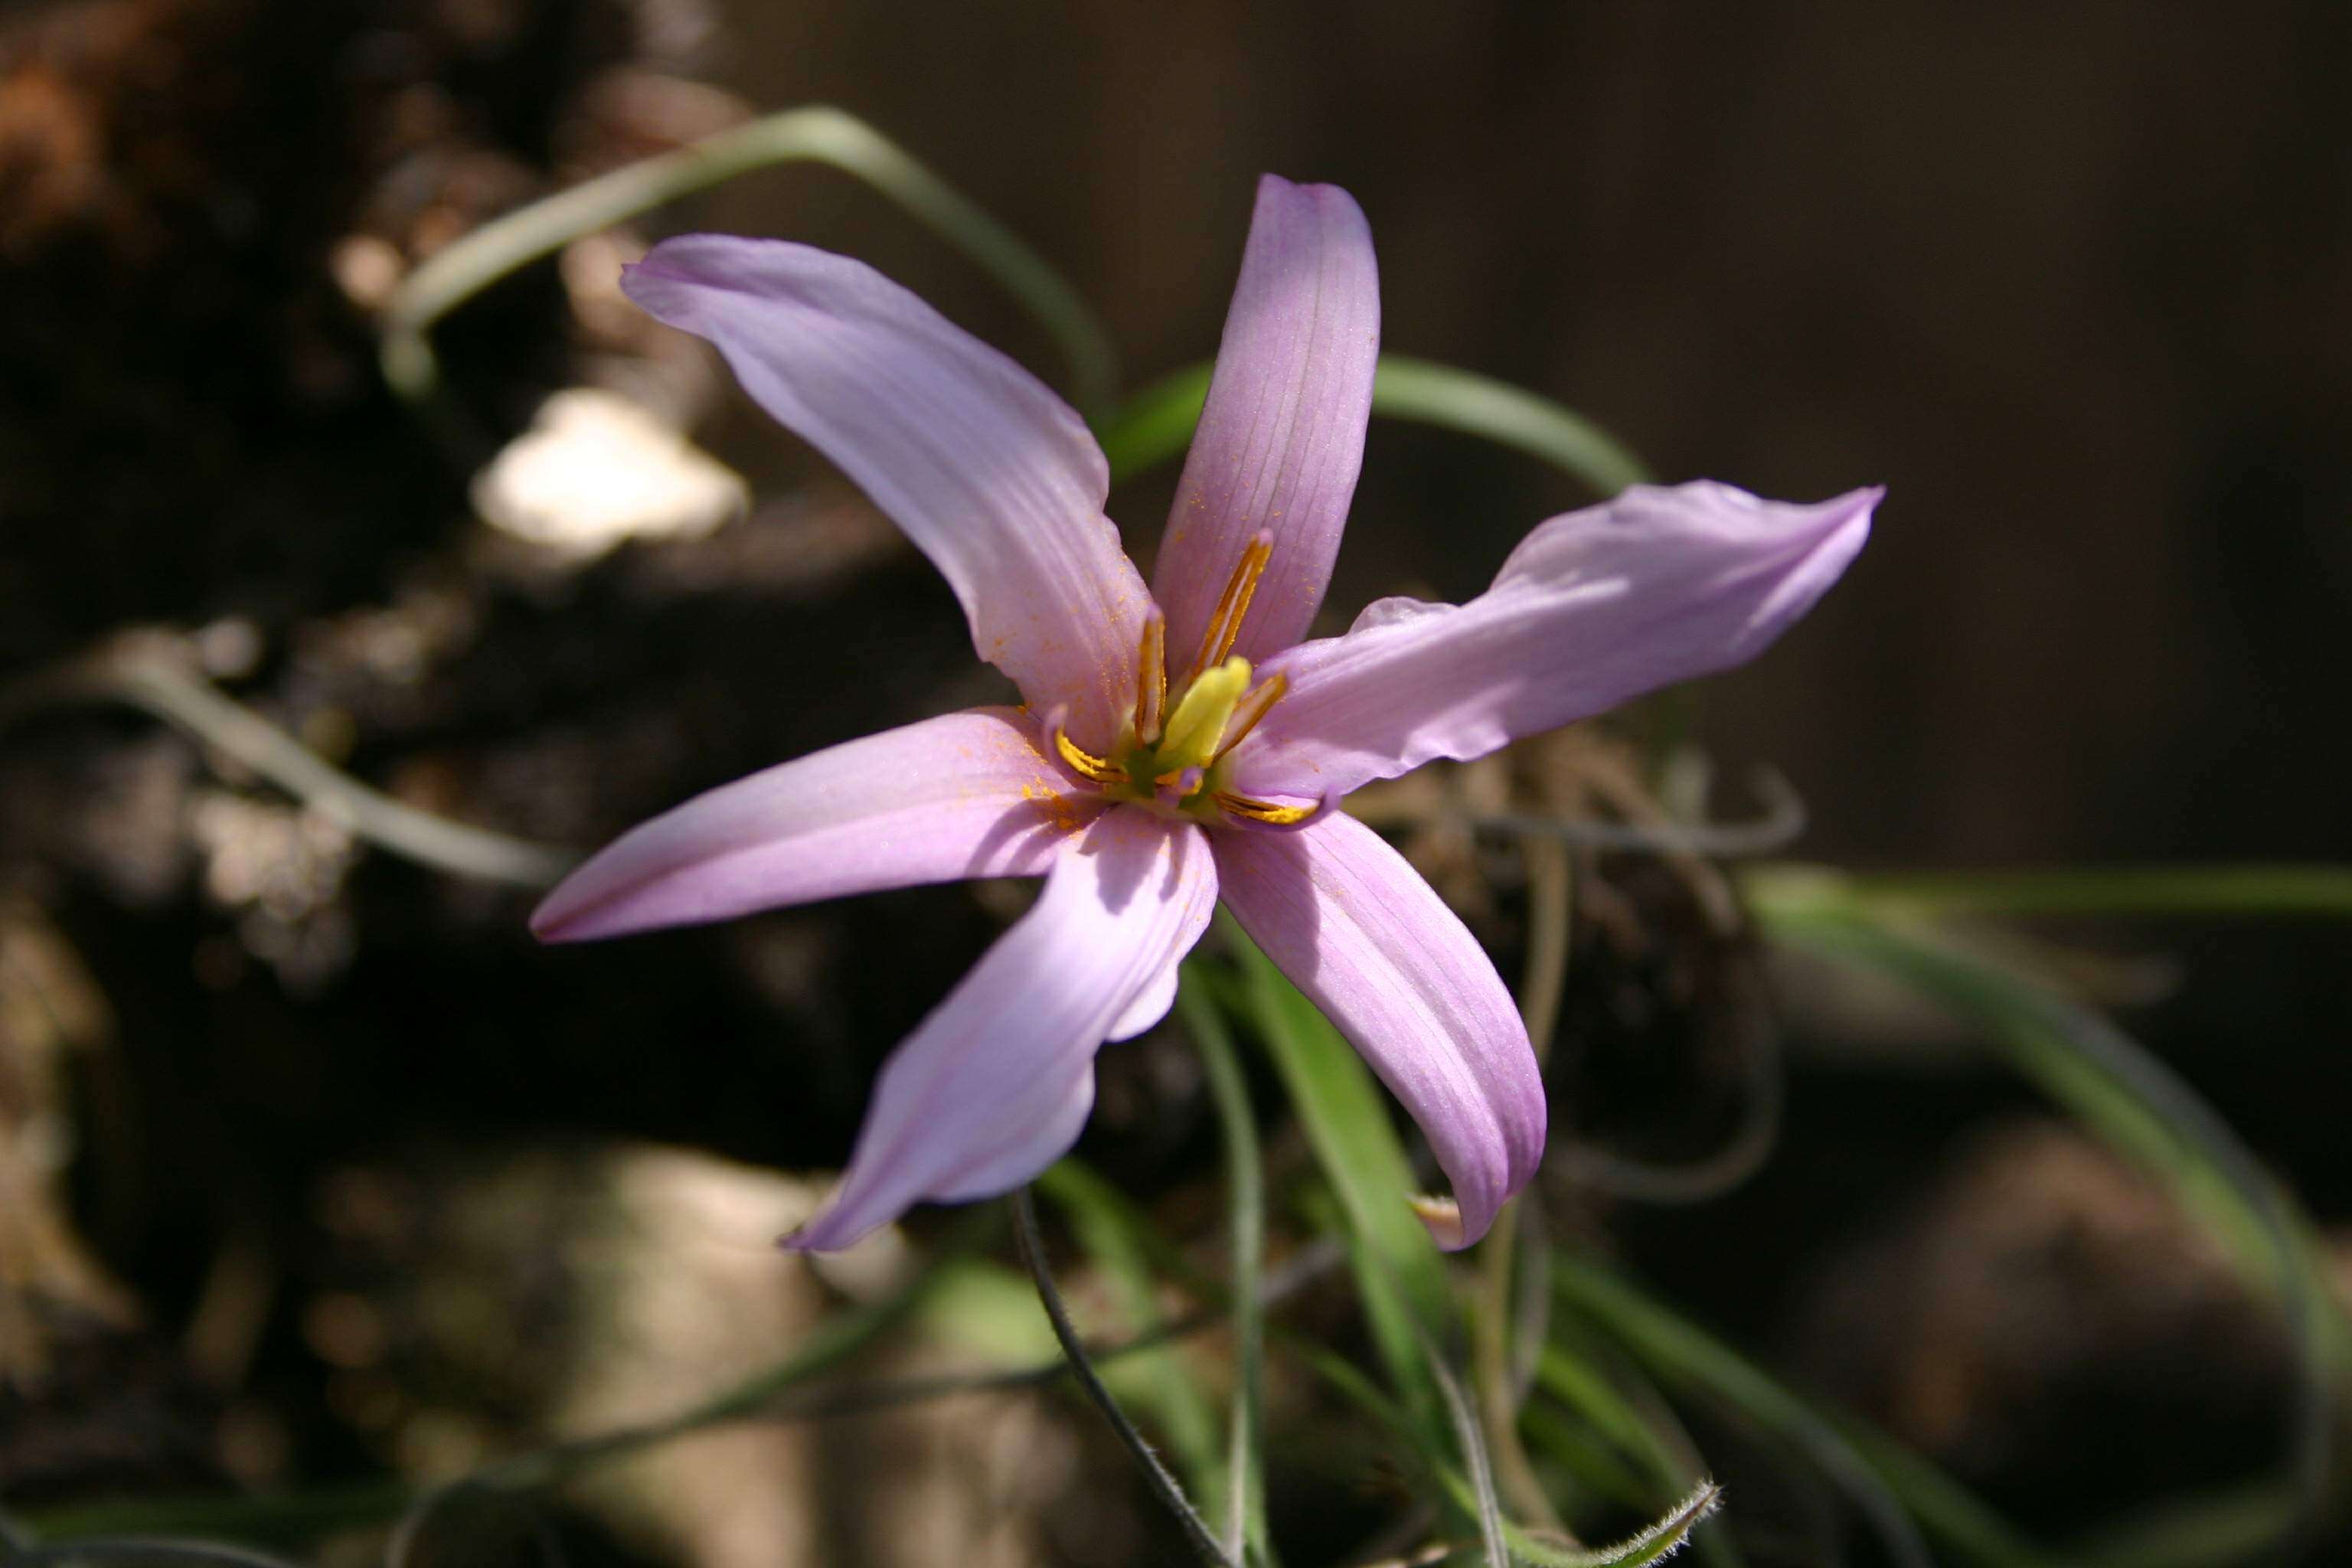 Image of Black-stick lily